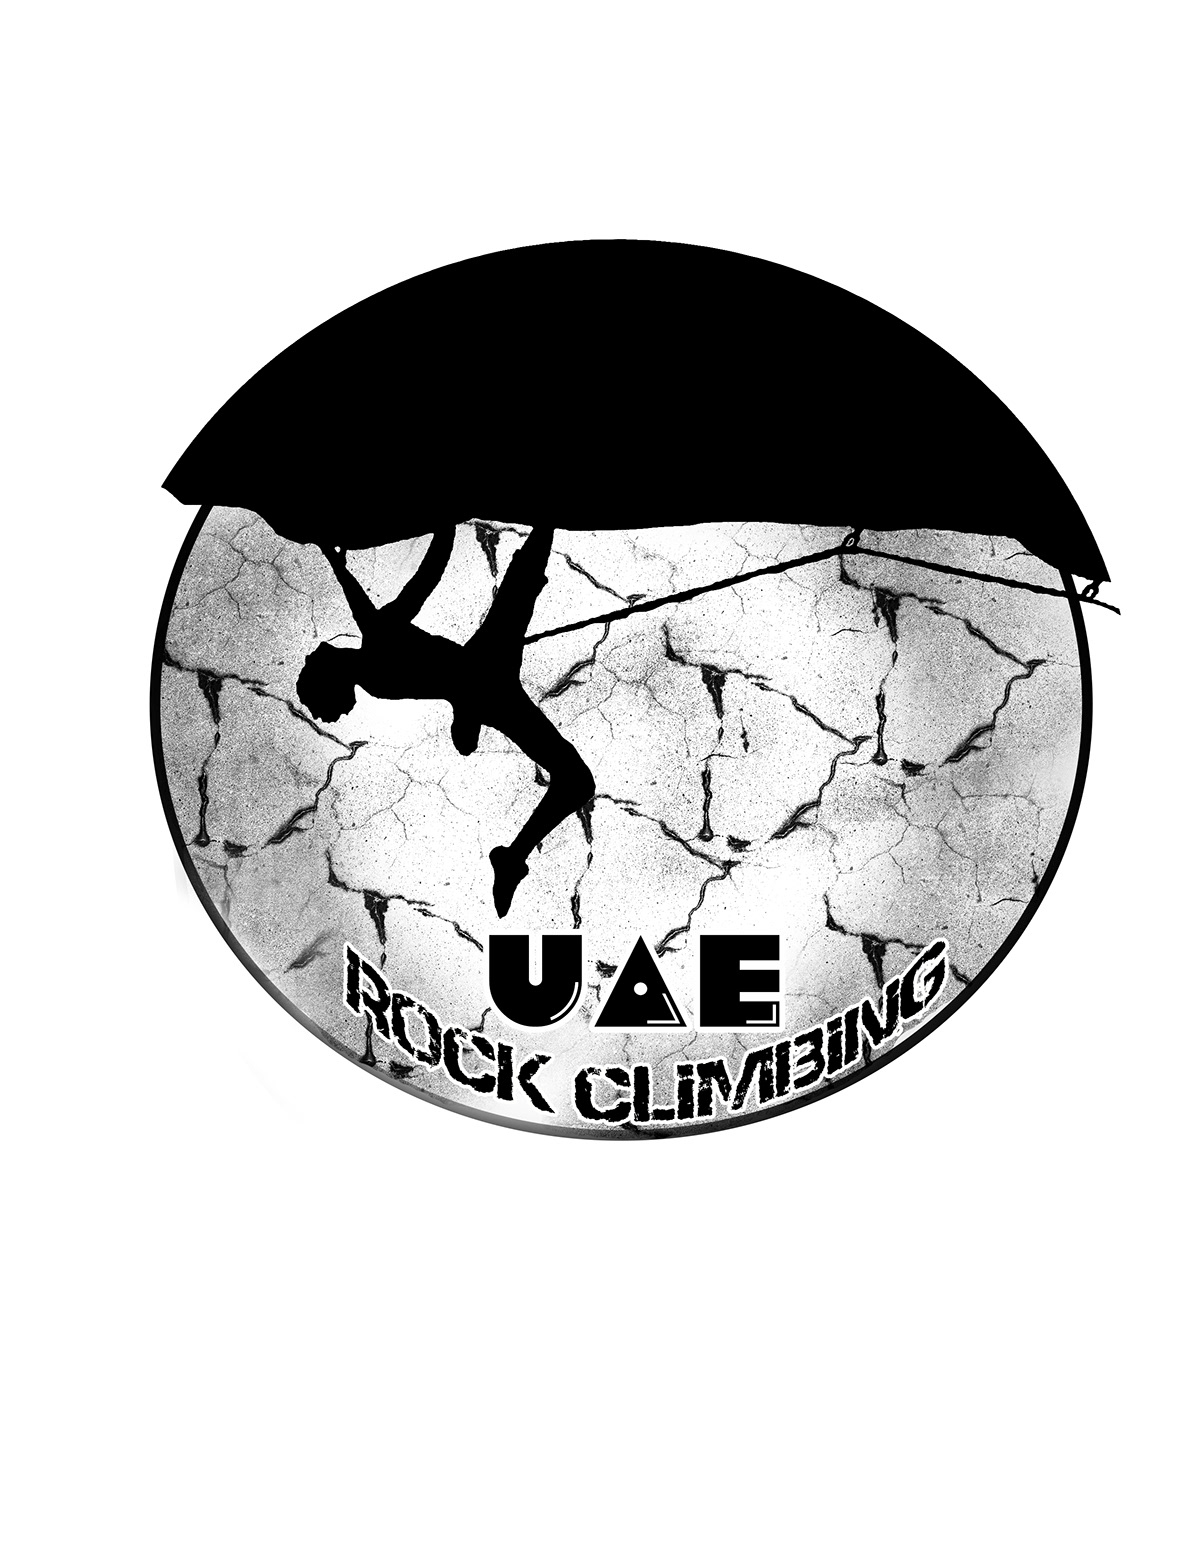 UAE UAE ROCK CLIMBING CLIMB FIT ME rock climbing PATCH UAE UAE CLIMBING LOGO